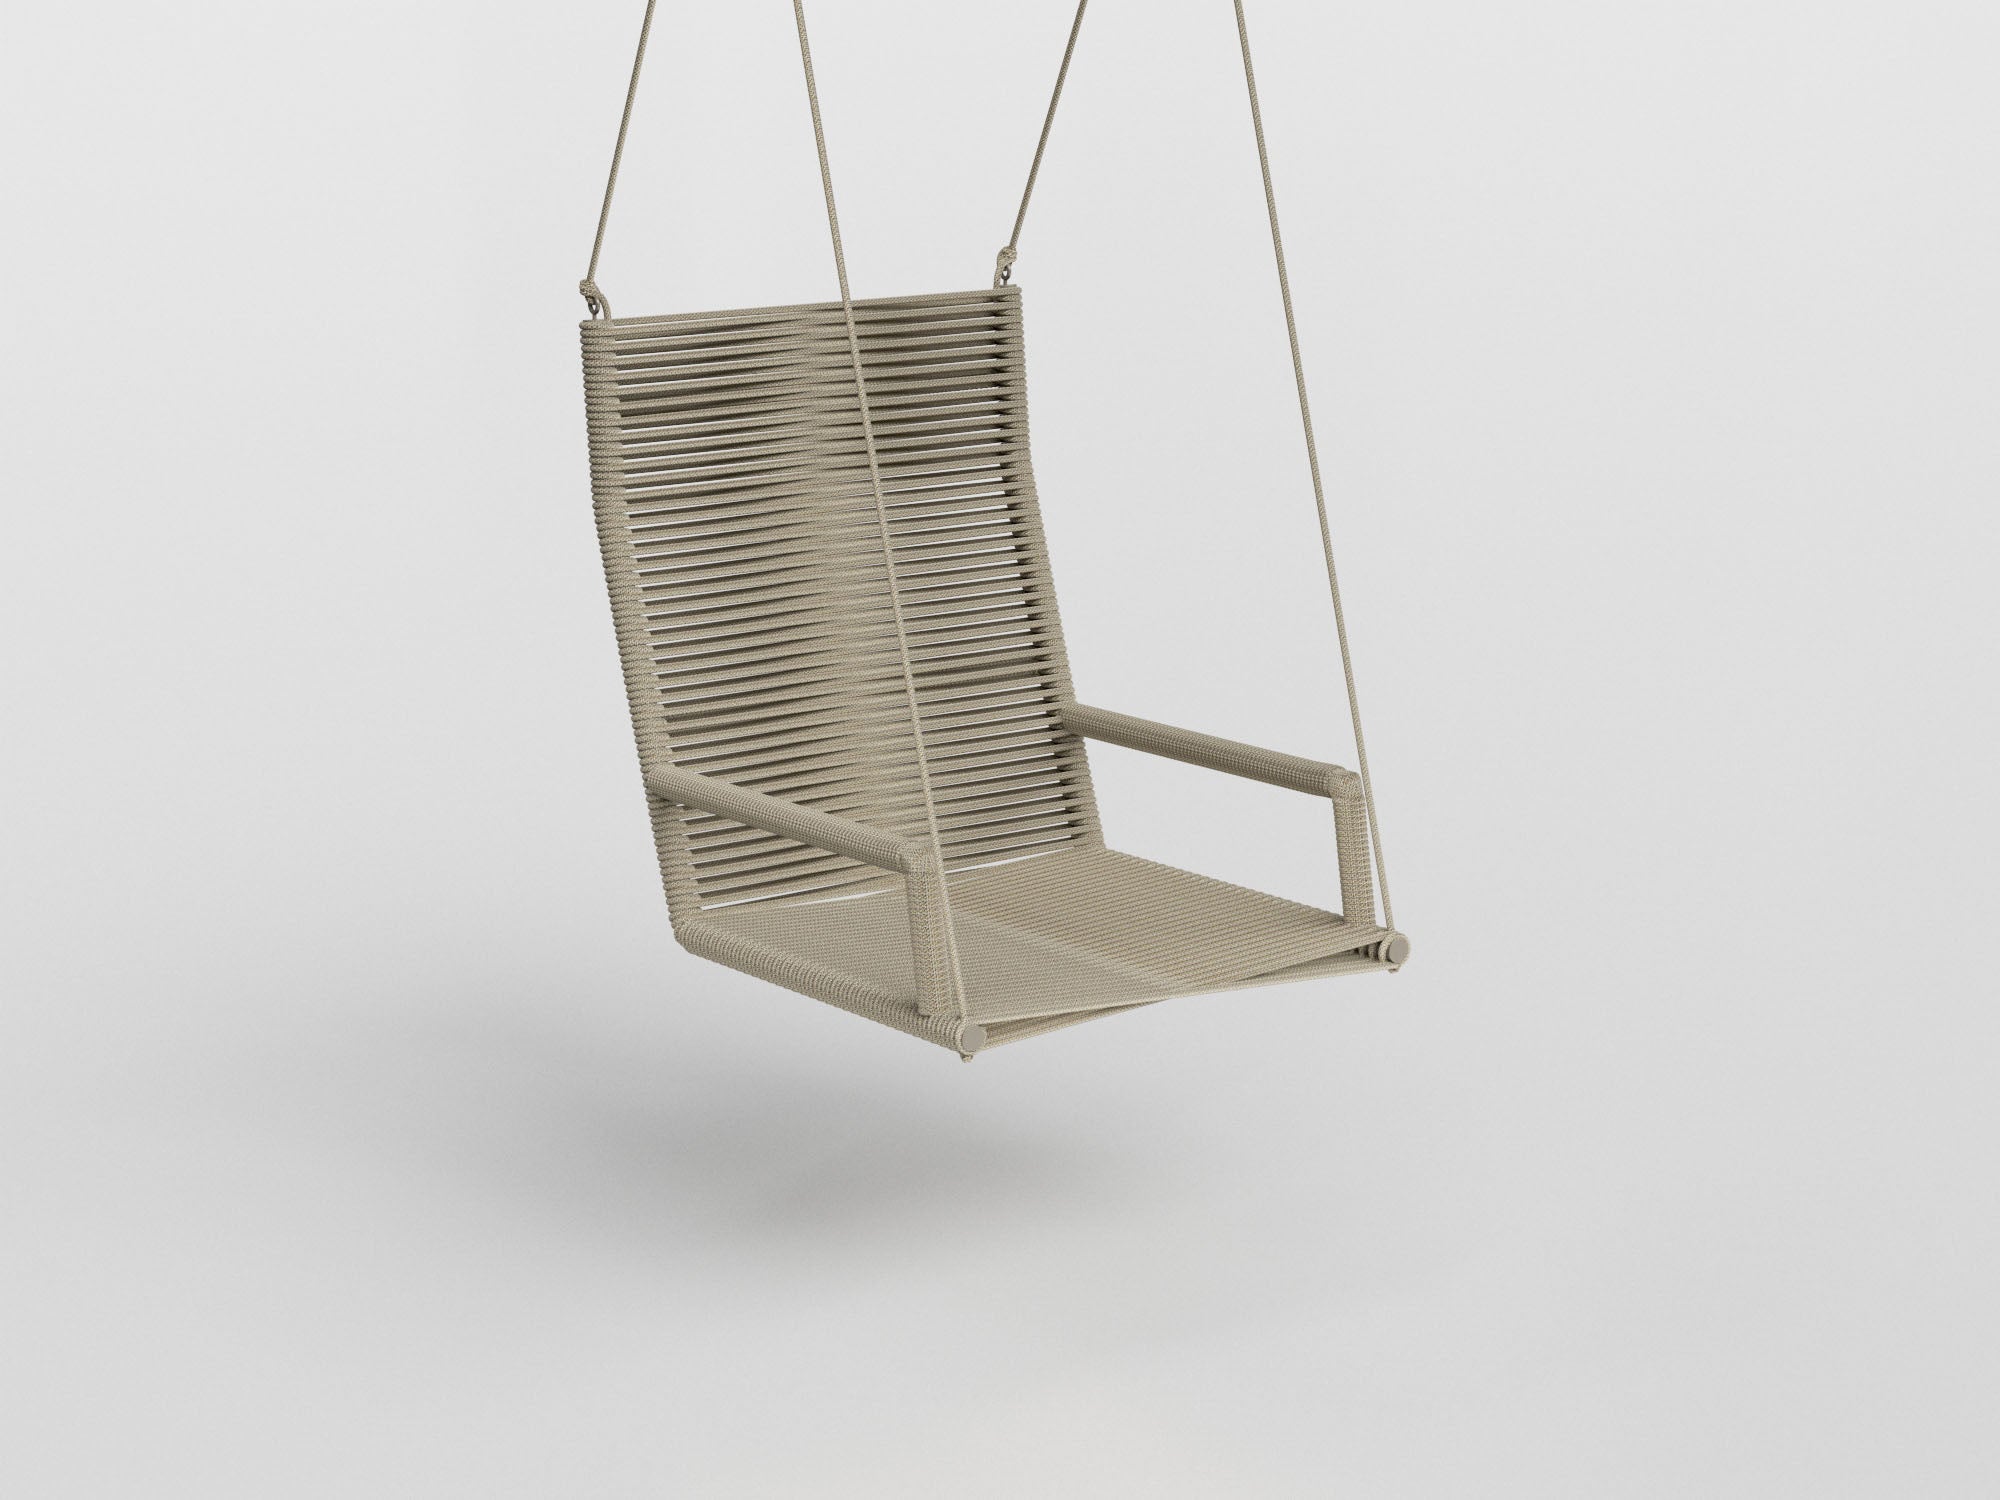 Bora Bora swing made of nautical rope and gray aluminum, designed by Luciano Mandelli 